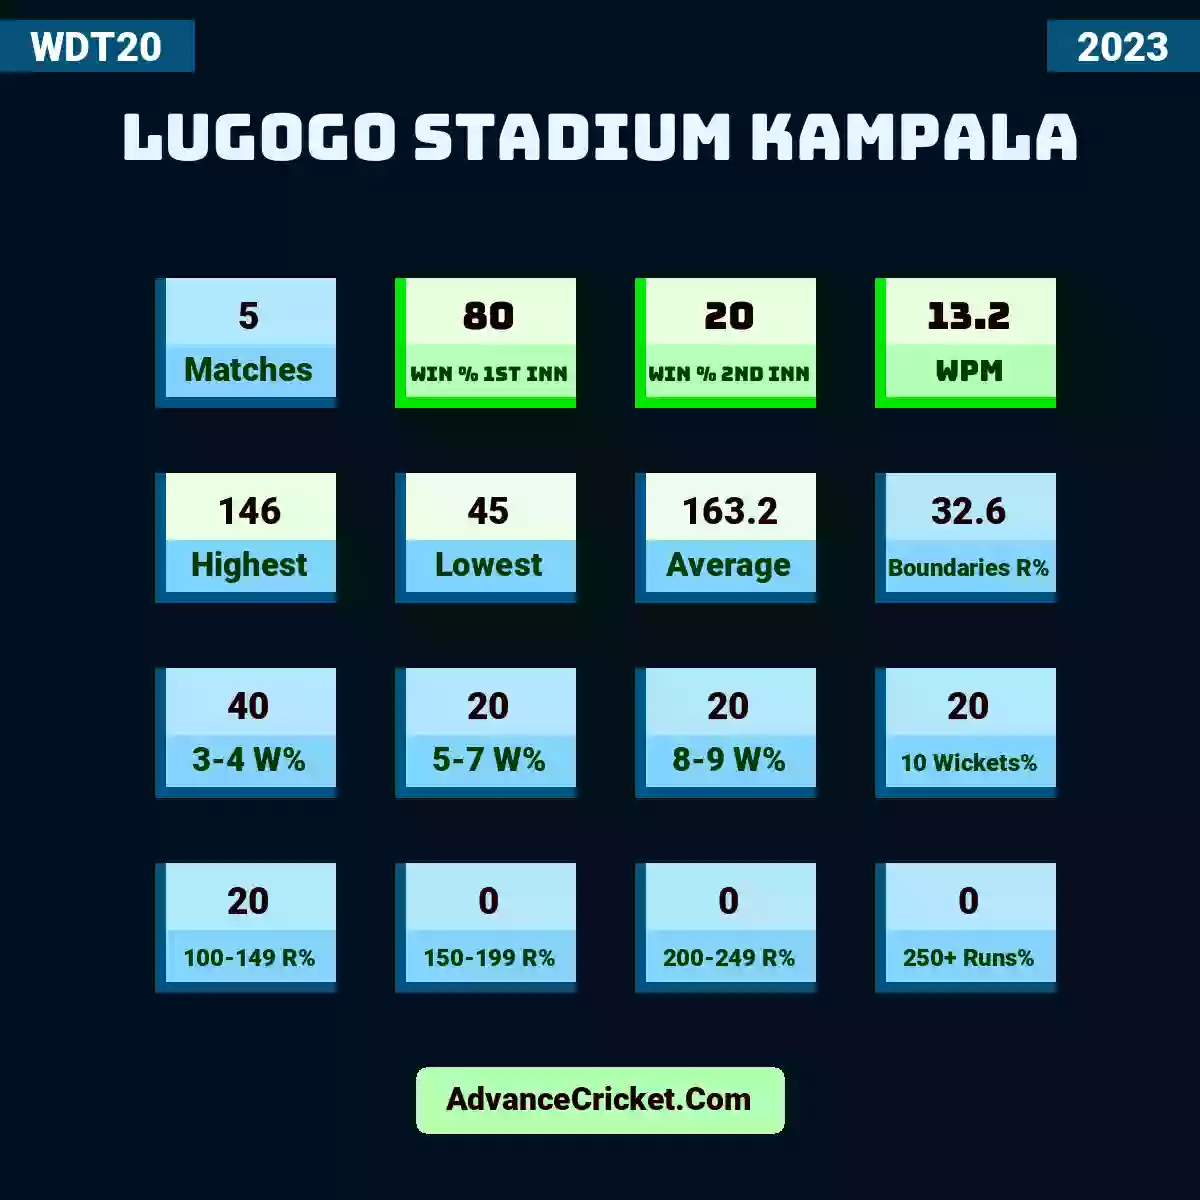 Image showing Lugogo Stadium Kampala with Matches: 5, Win % 1st Inn: 80, Win % 2nd Inn: 20, WPM: 13.2, Highest: 146, Lowest: 45, Average: 163.2, Boundaries R%: 32.6, 3-4 W%: 40, 5-7 W%: 20, 8-9 W%: 20, 10 Wickets%: 20, 100-149 R%: 20, 150-199 R%: 0, 200-249 R%: 0, 250+ Runs%: 0.